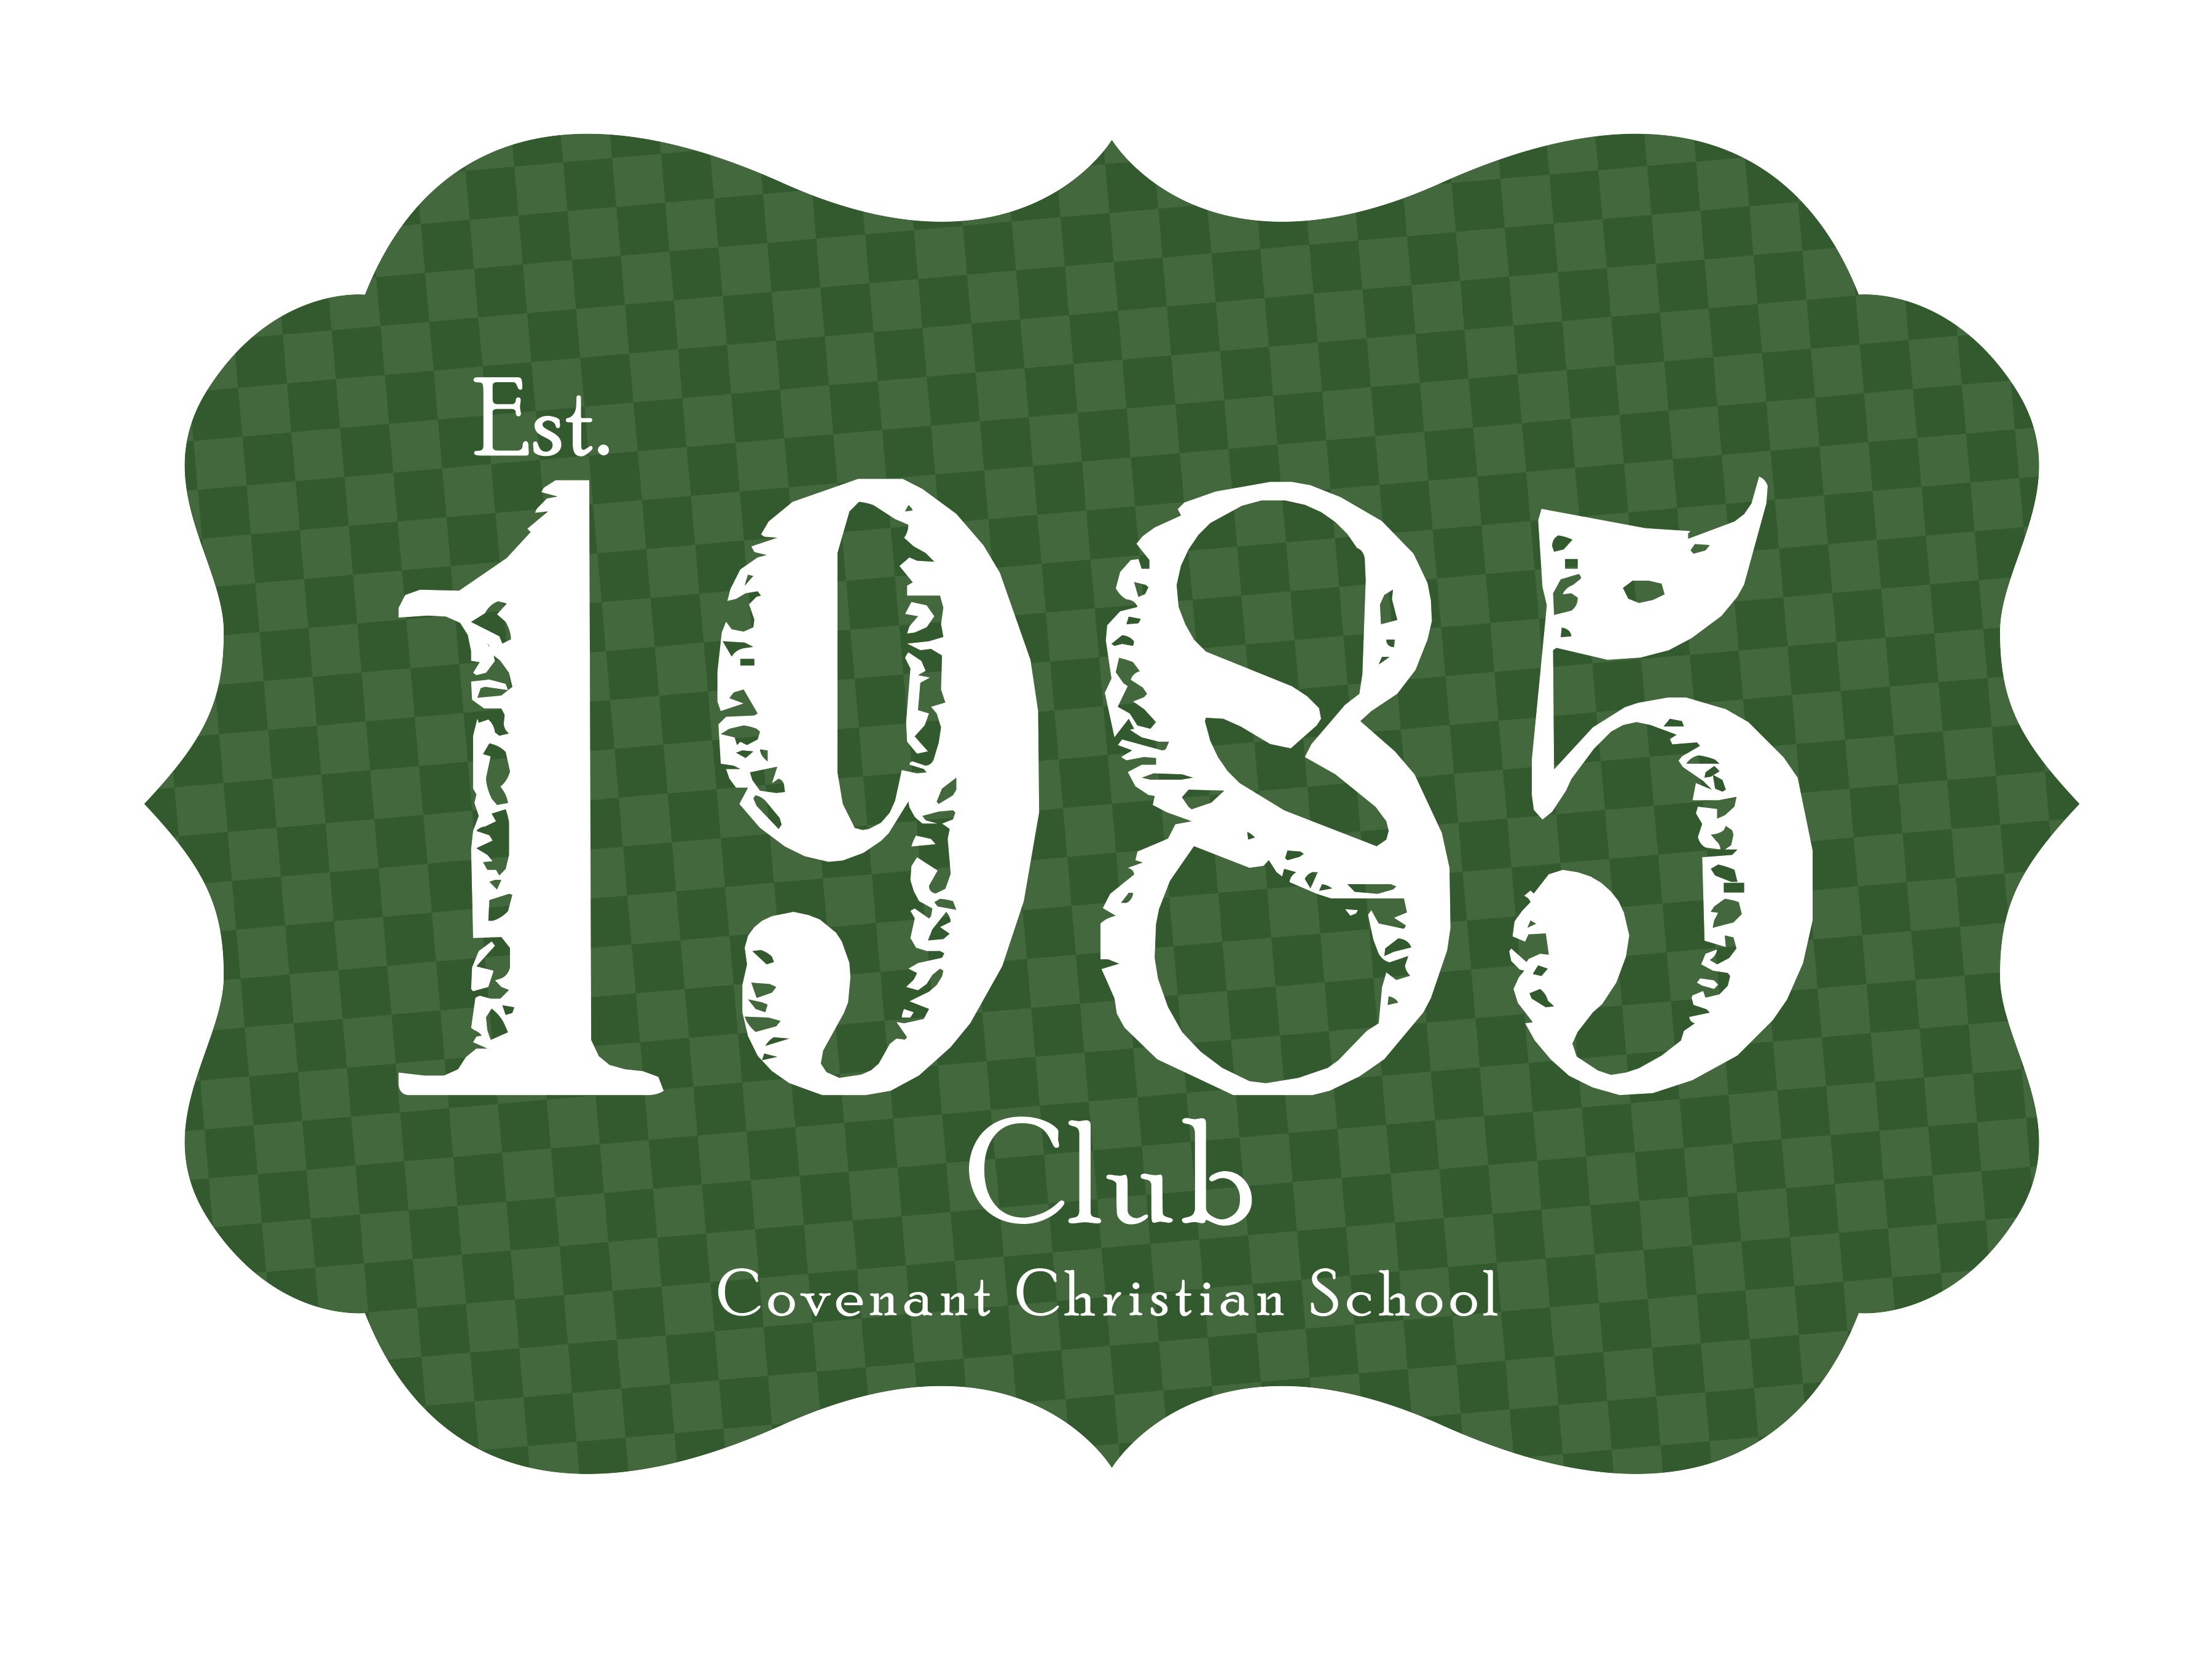 The 1985 Club Covenant Christian School